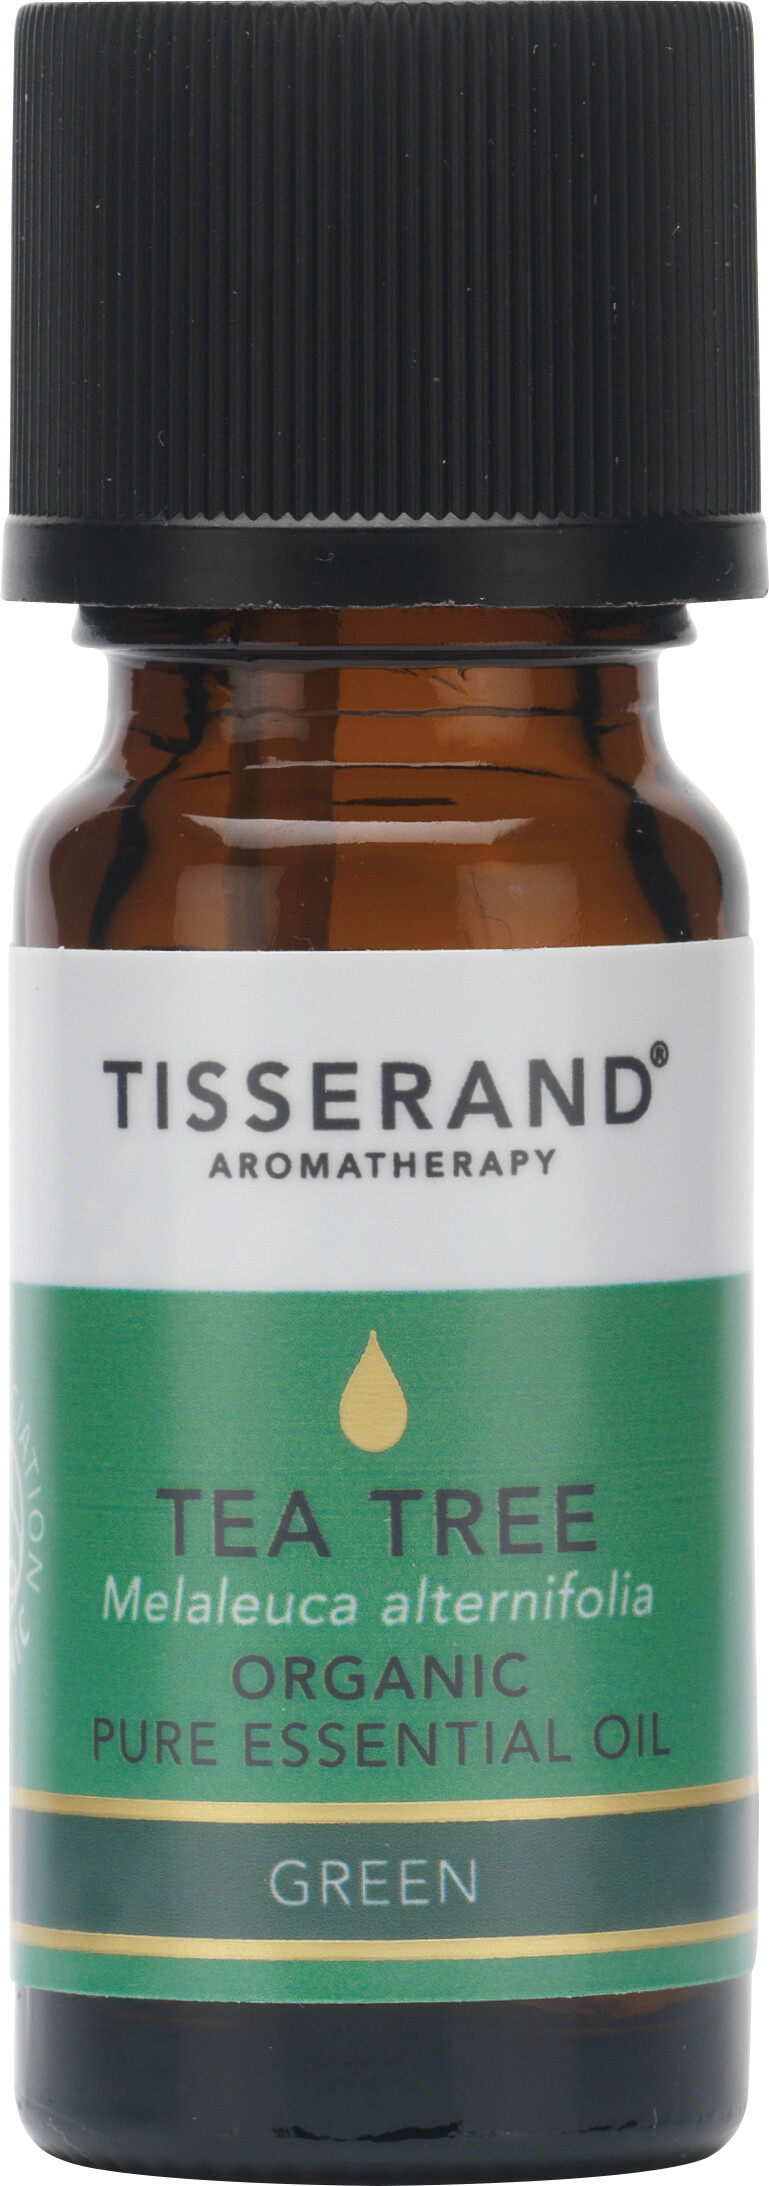 Tisserand Aromatherapy Tea-Tree Organic Pure Essential Oil 9ml